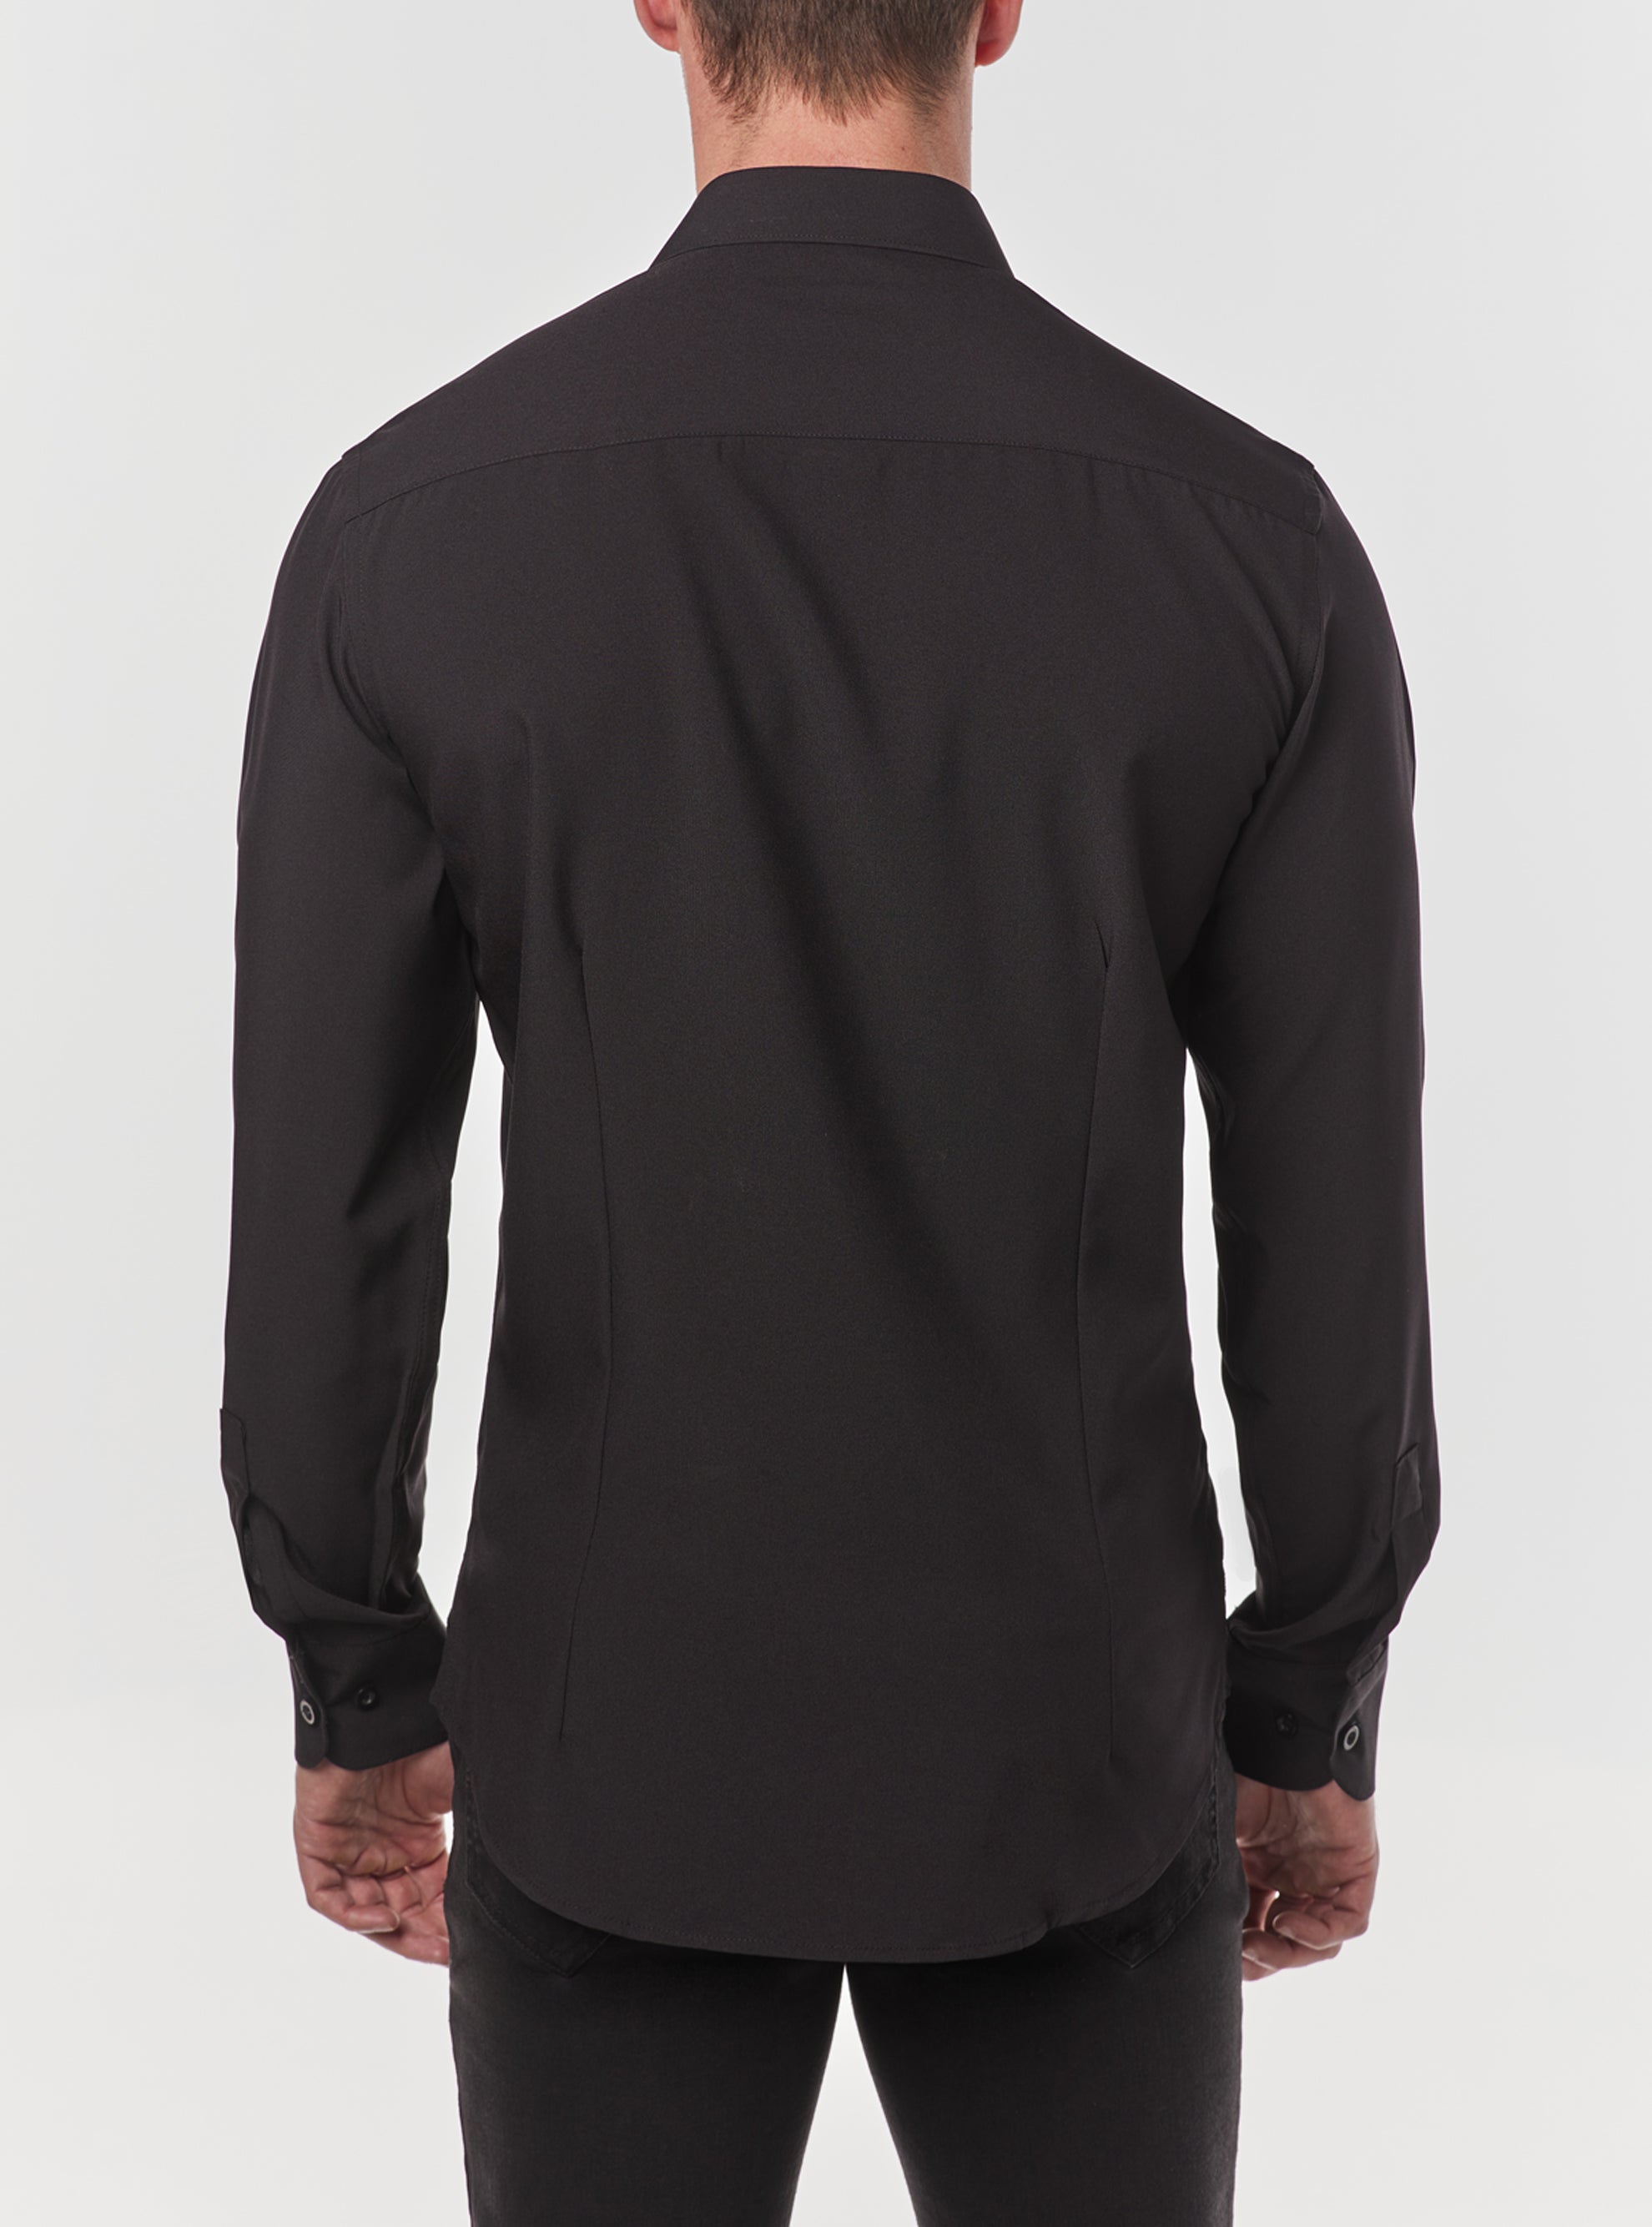 Plain black stretch shirt